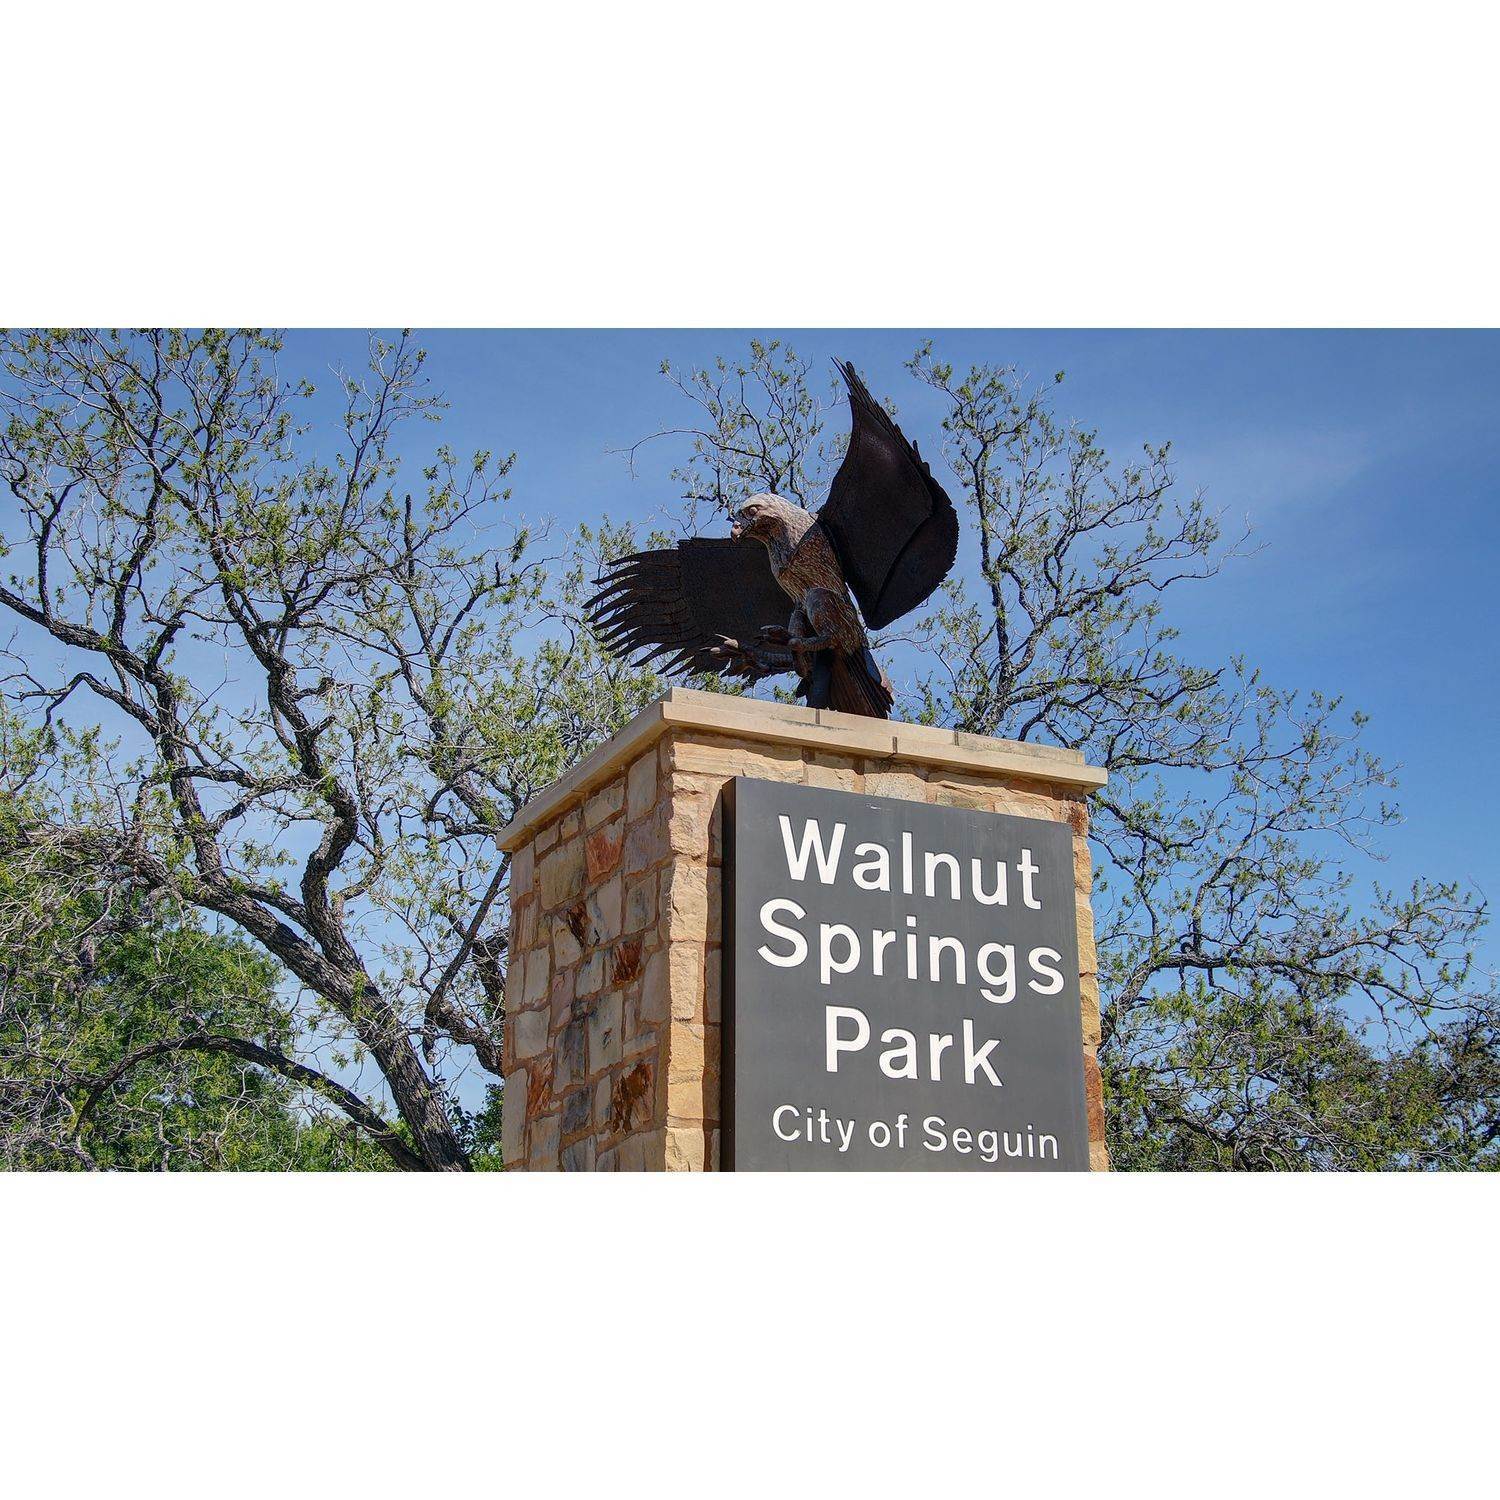 5. The Village of Mill Creek 50' byggnad vid 2809 Pearl Barley, Seguin, TX 78155